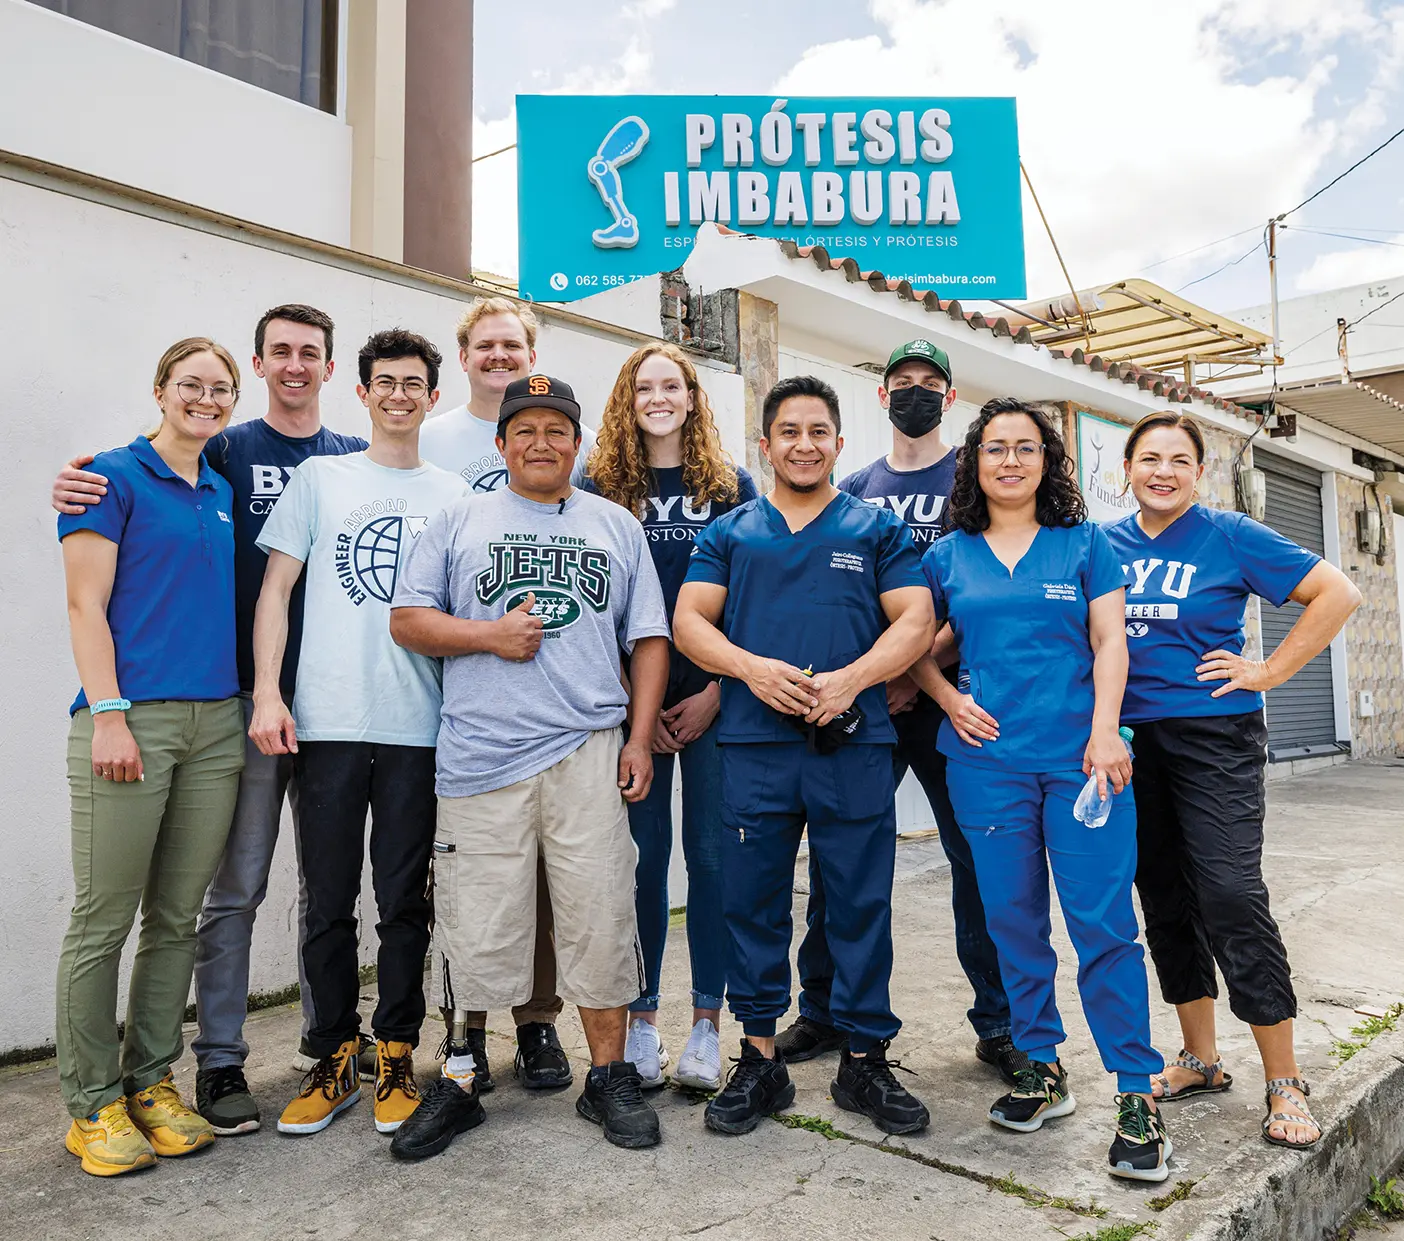 BYU students pose with Ecuadorians outside a prosthetics clinic in Ibarra, Ecuador.